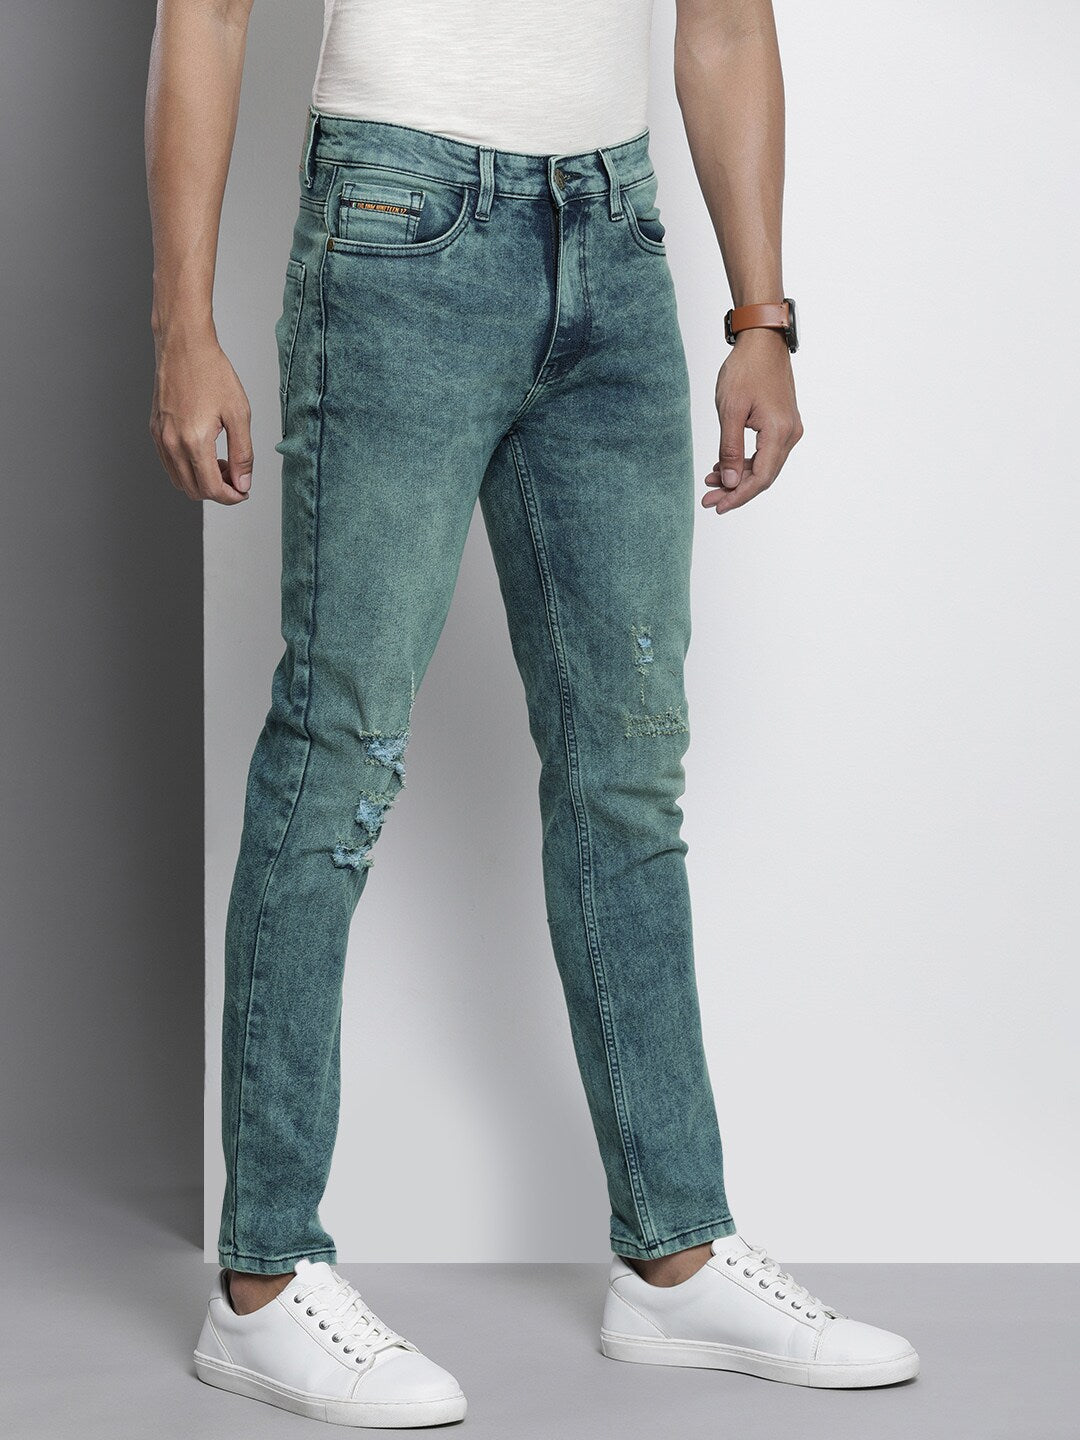 Shop Men Solid Jeans Online.